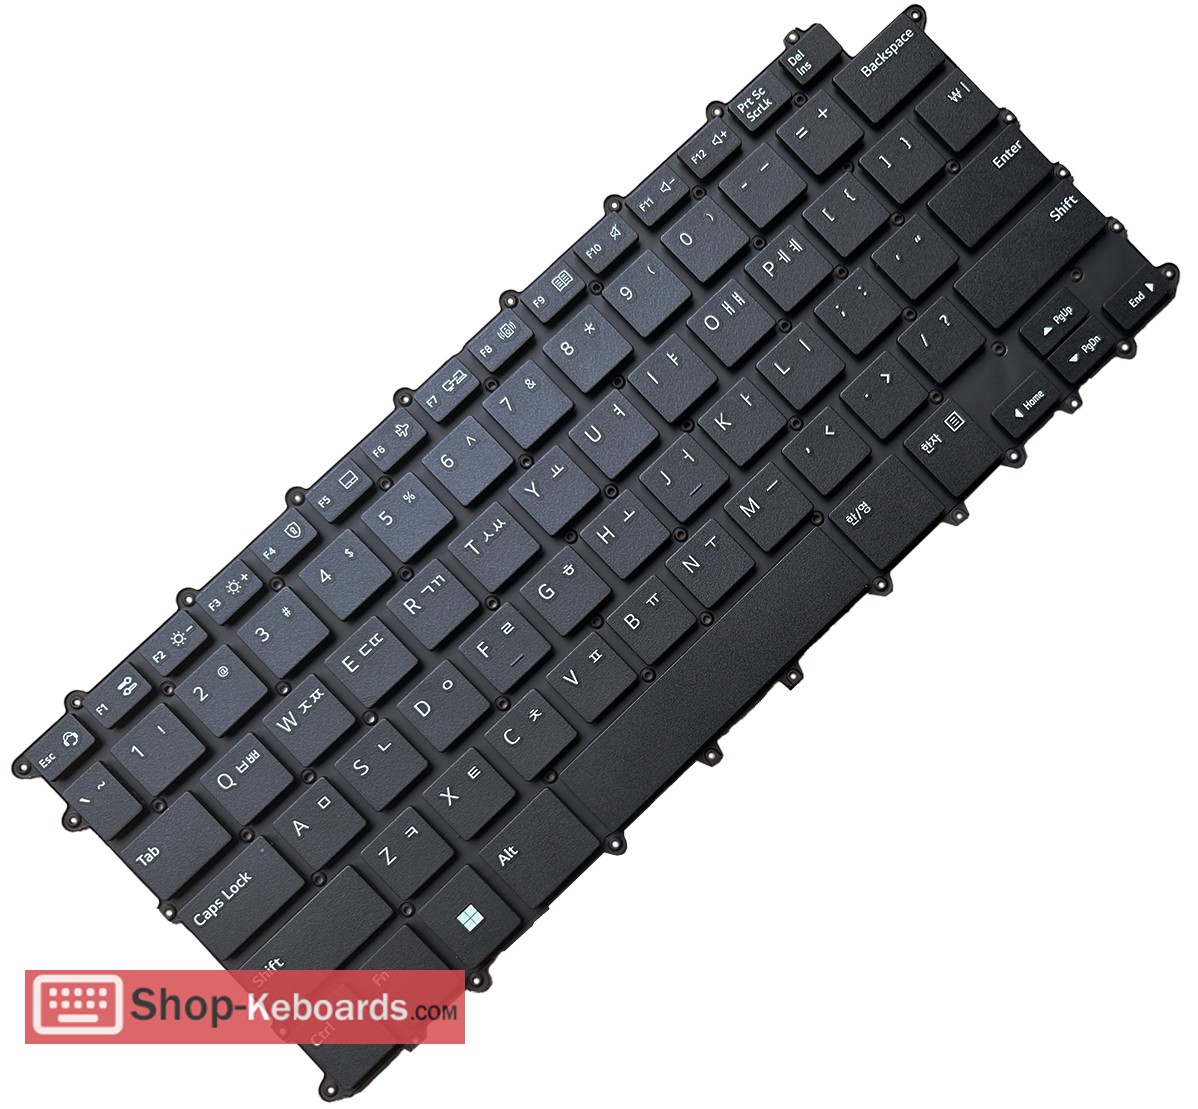 LG 14U70Q-KA78J1  Keyboard replacement